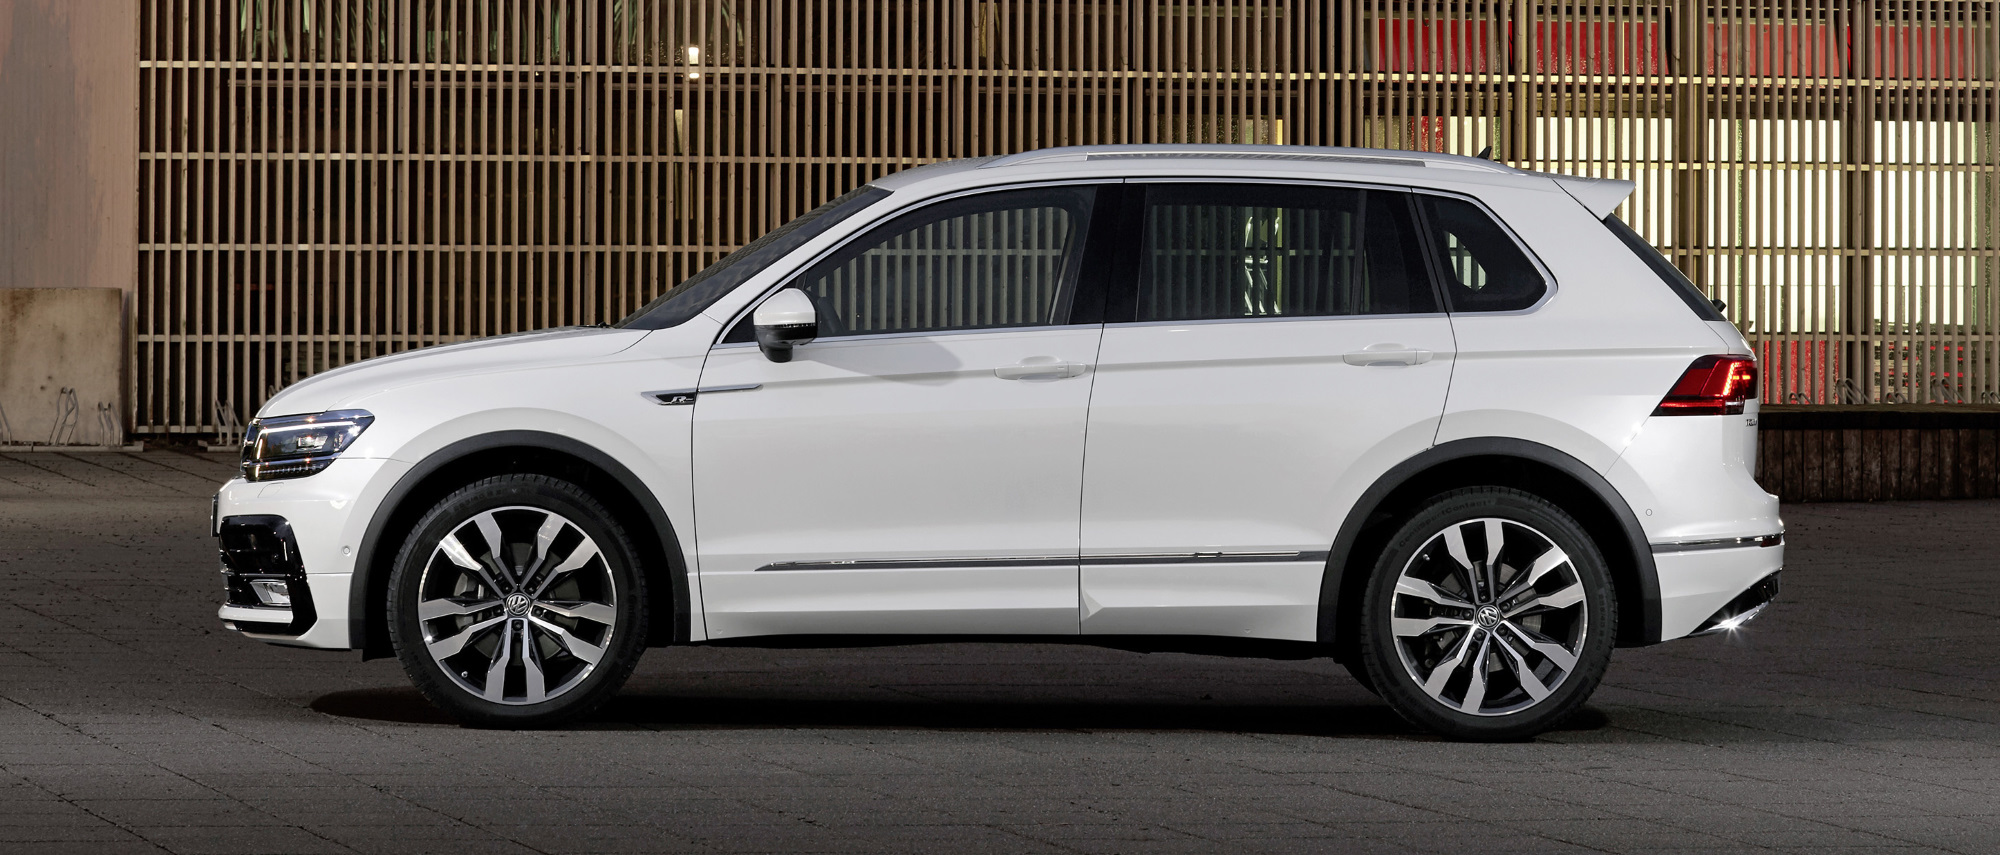 2016 2021 VW Tiguan Facelift Side-To-Side Comparison ...